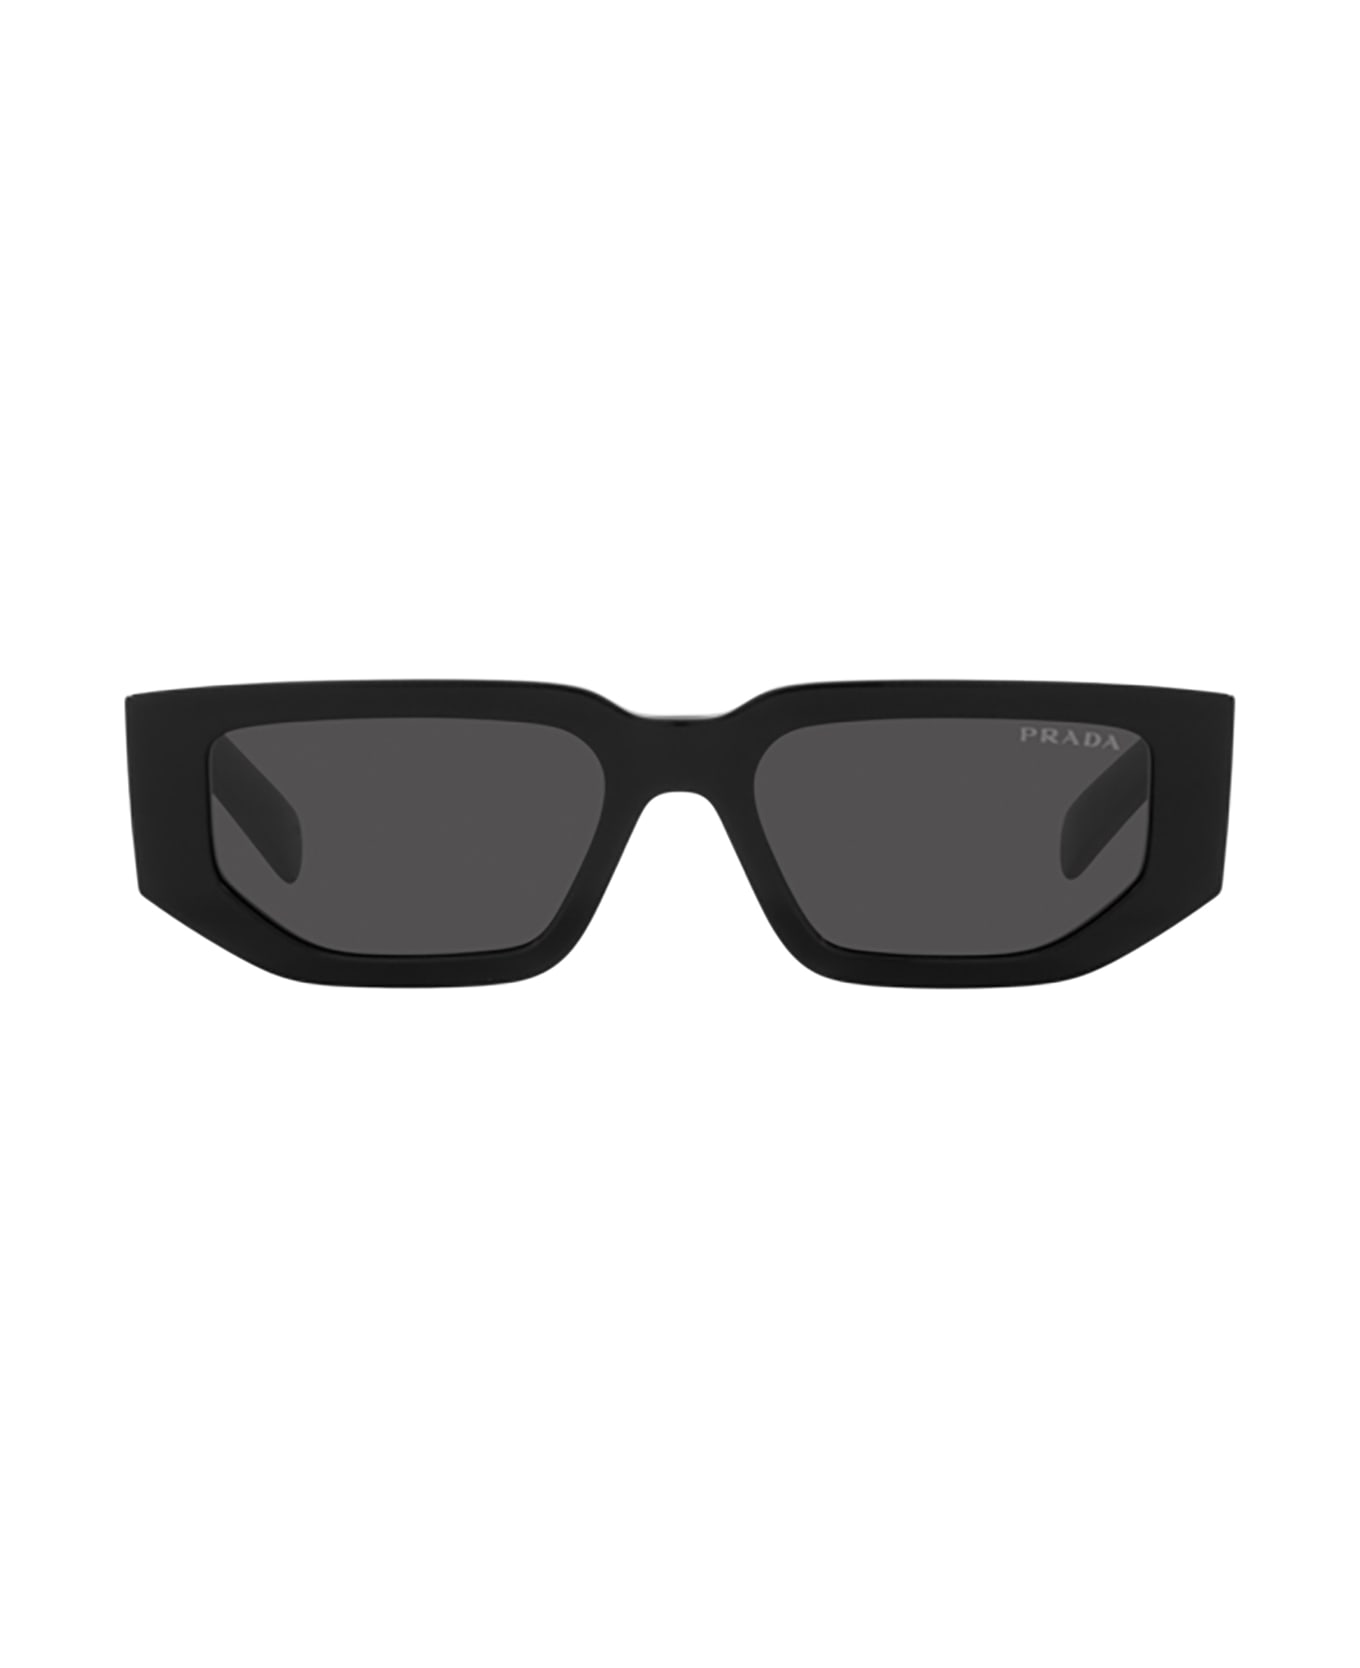 Prada Eyewear Pr 09zs Black Sunglasses - Black